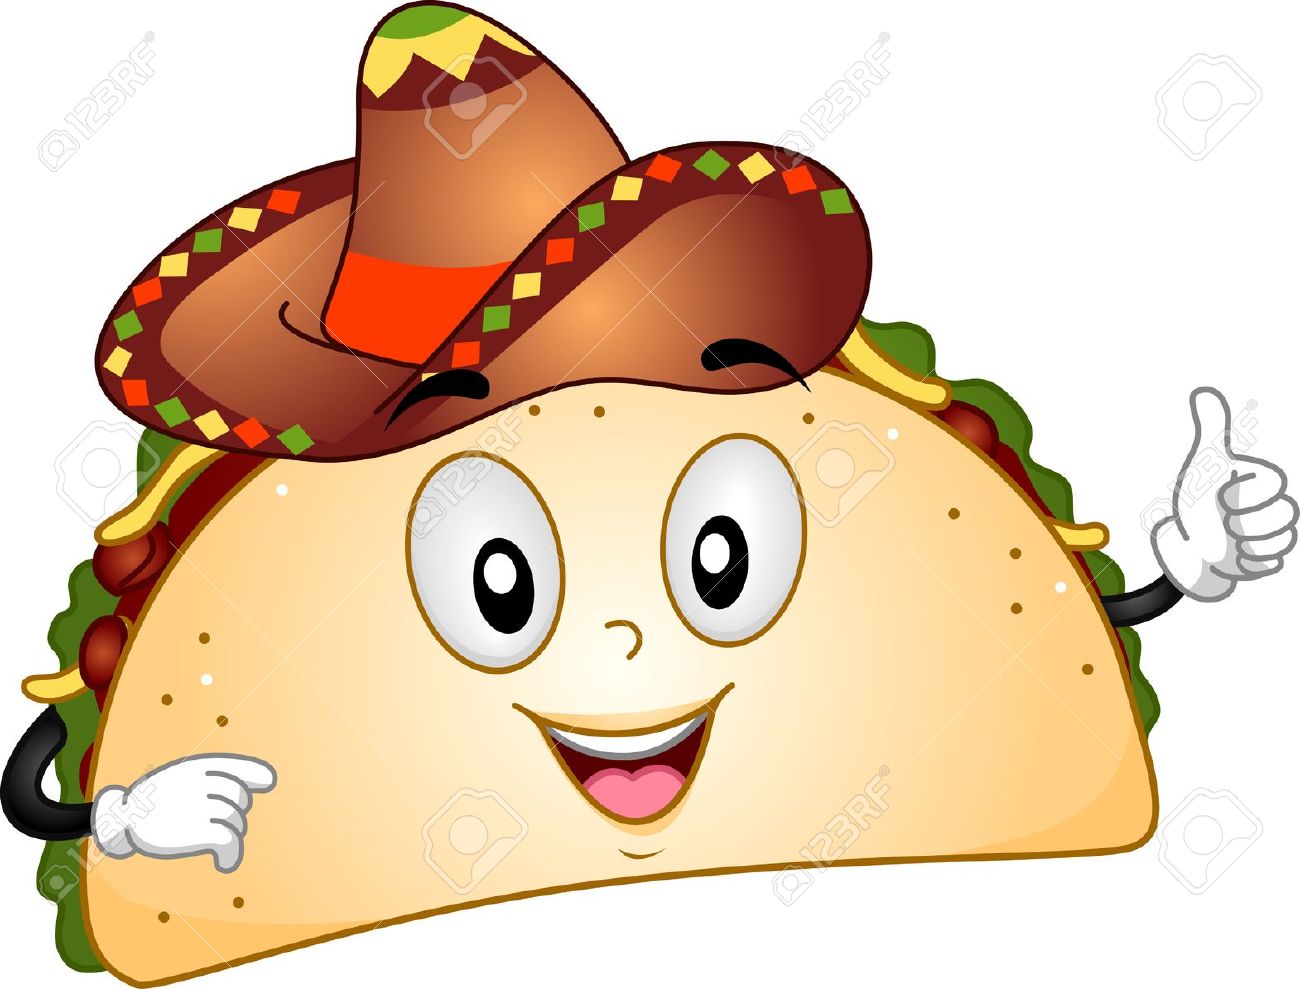 Taco images free download. Tacos clipart cartoon